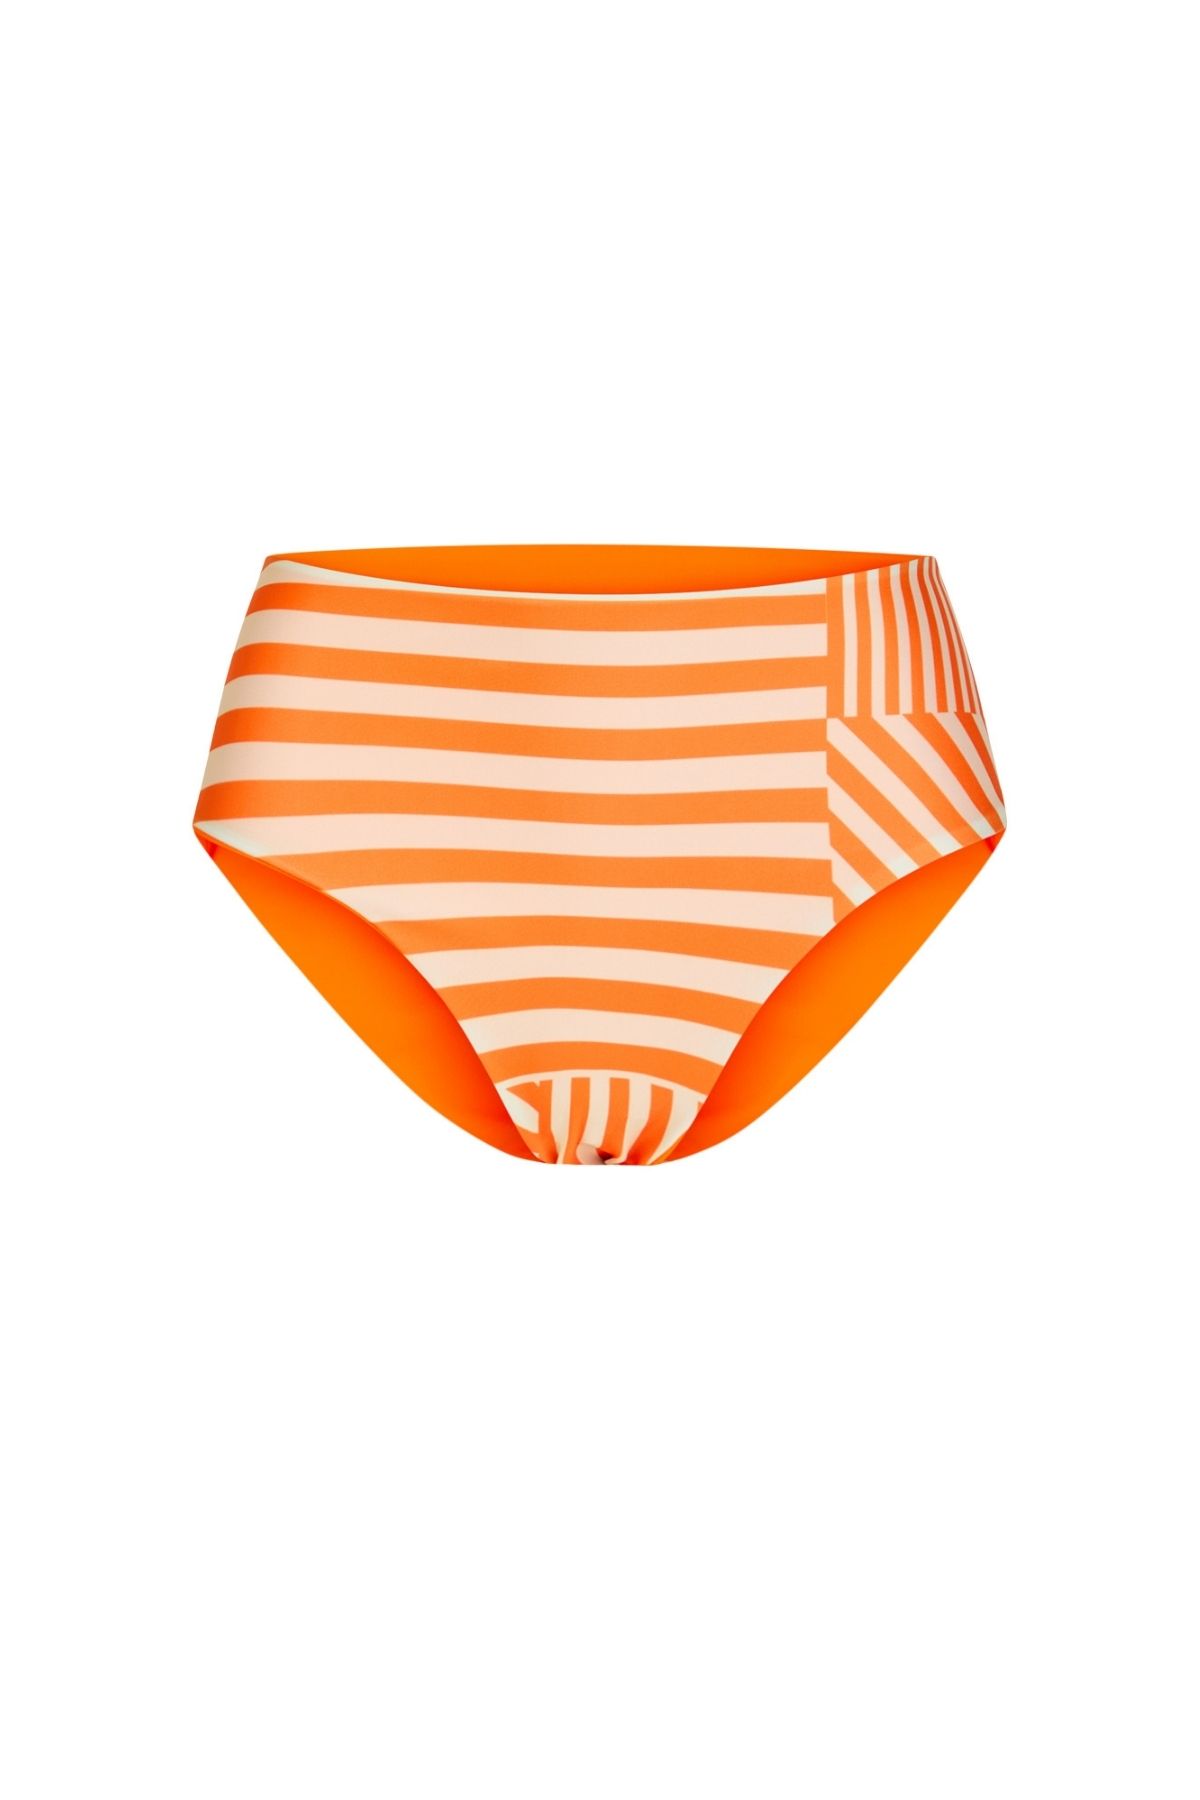 Mads Nørgaard x CC Ubud reversible bikini bottom - Flame